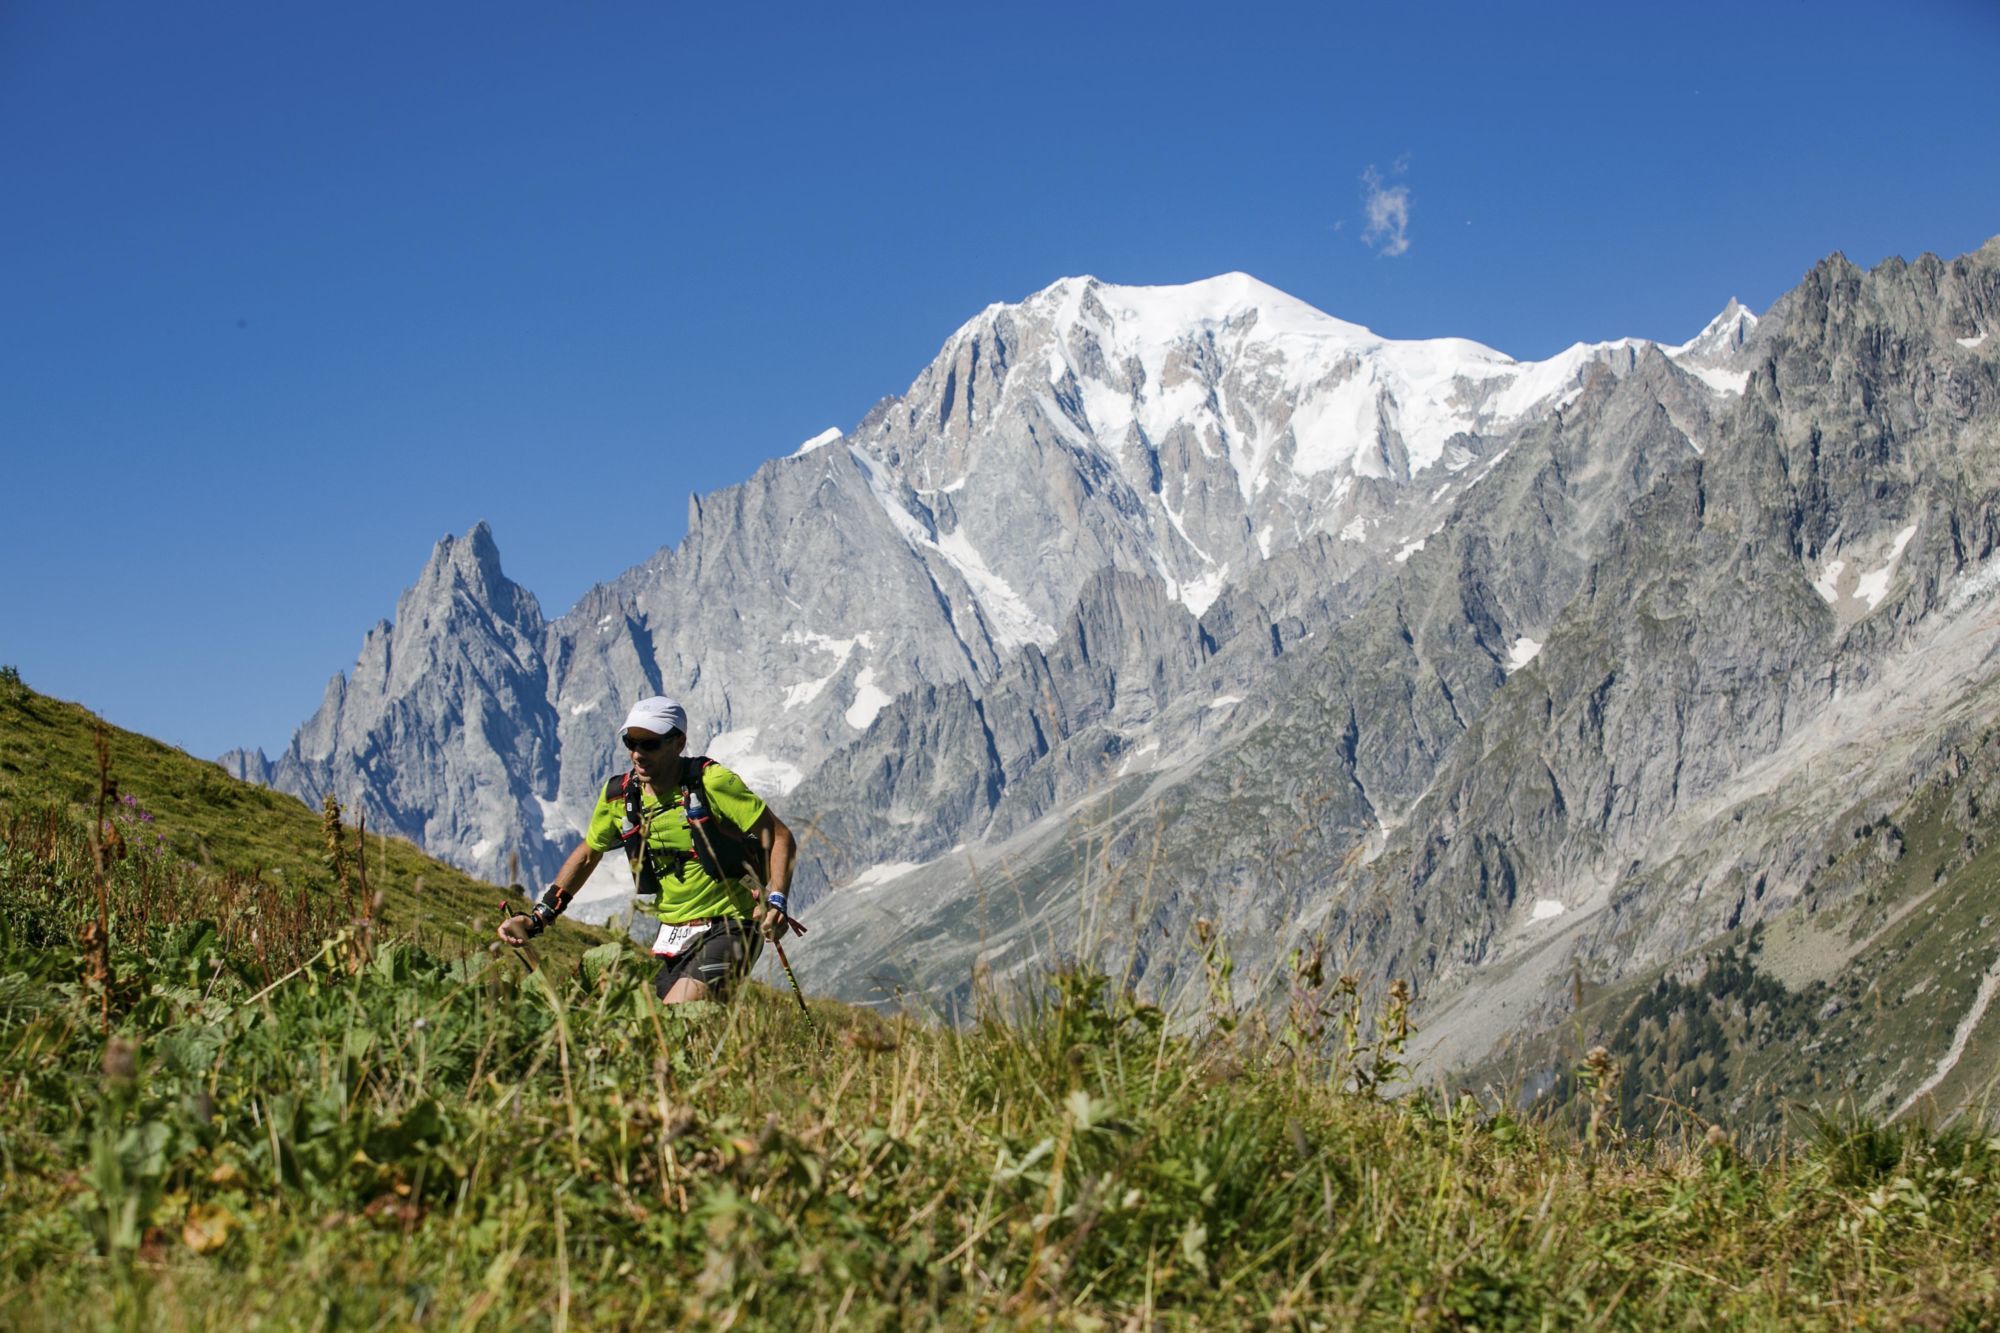 UTMB / Ultra-Trail Mont Blanc
Photo Icon Sport